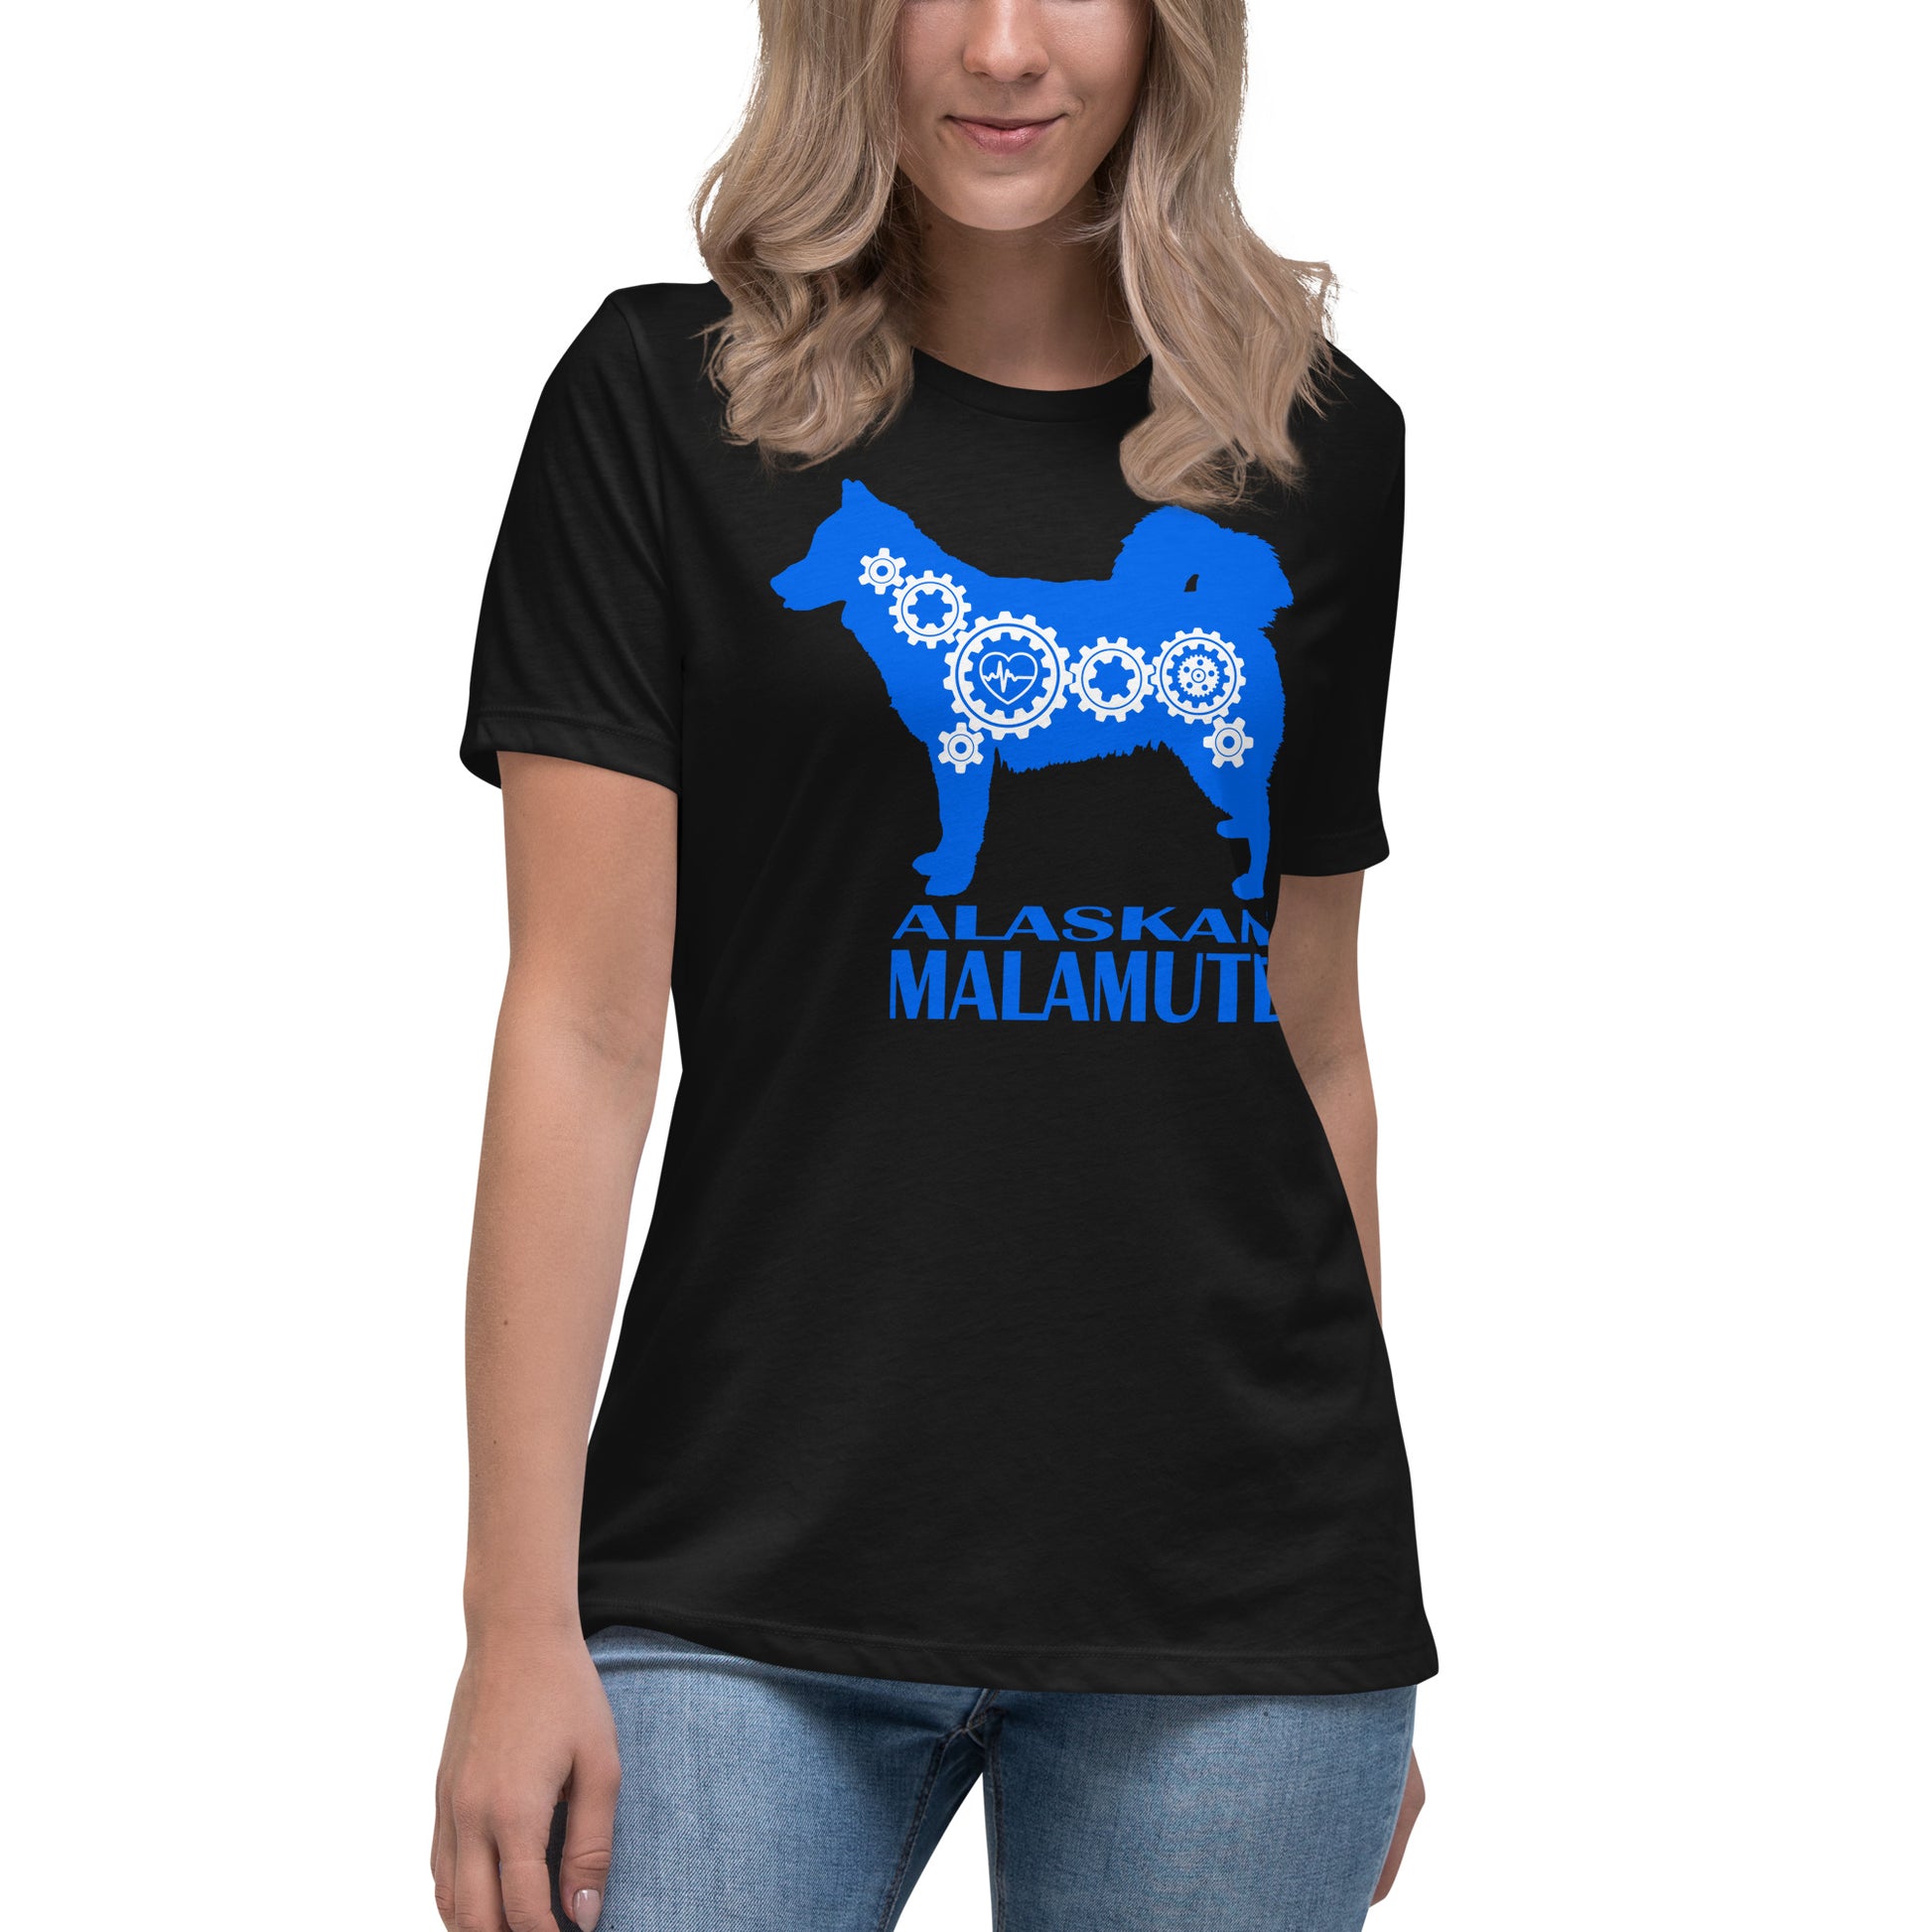 Alaskan Malamute Bionic women’s black t-shirt by Dog Artistry.